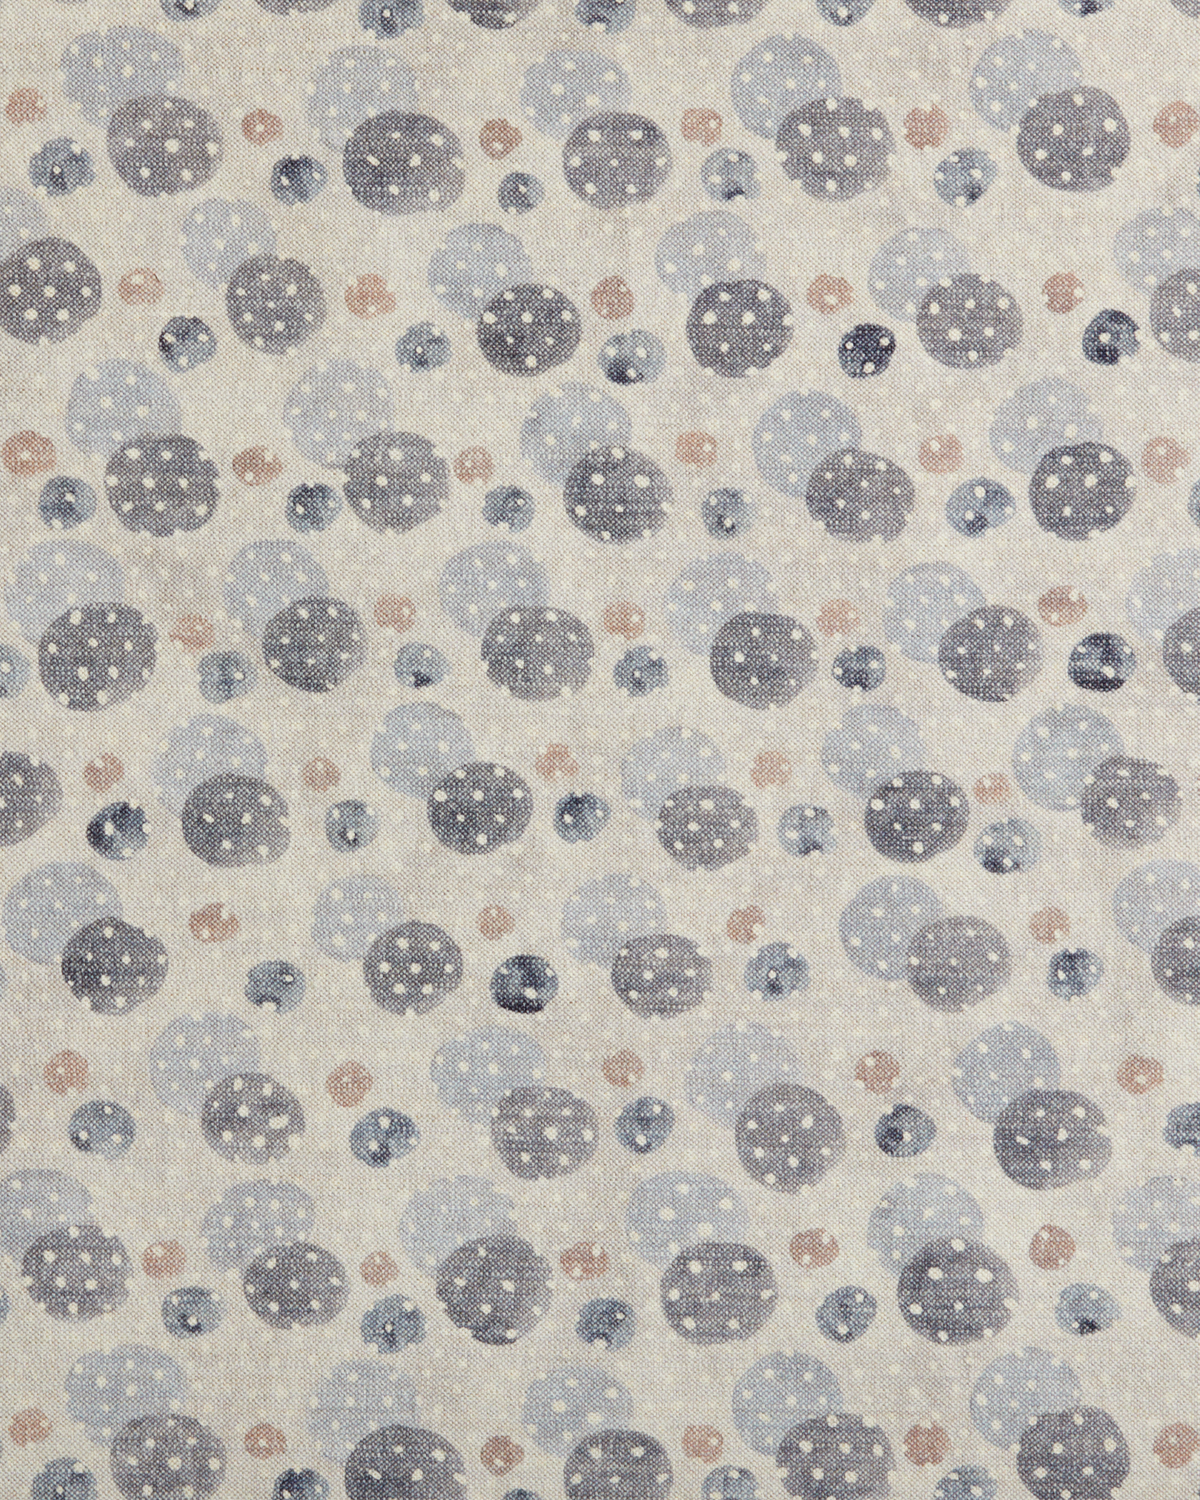 Dobler Dot Fabric in Gray/Natural